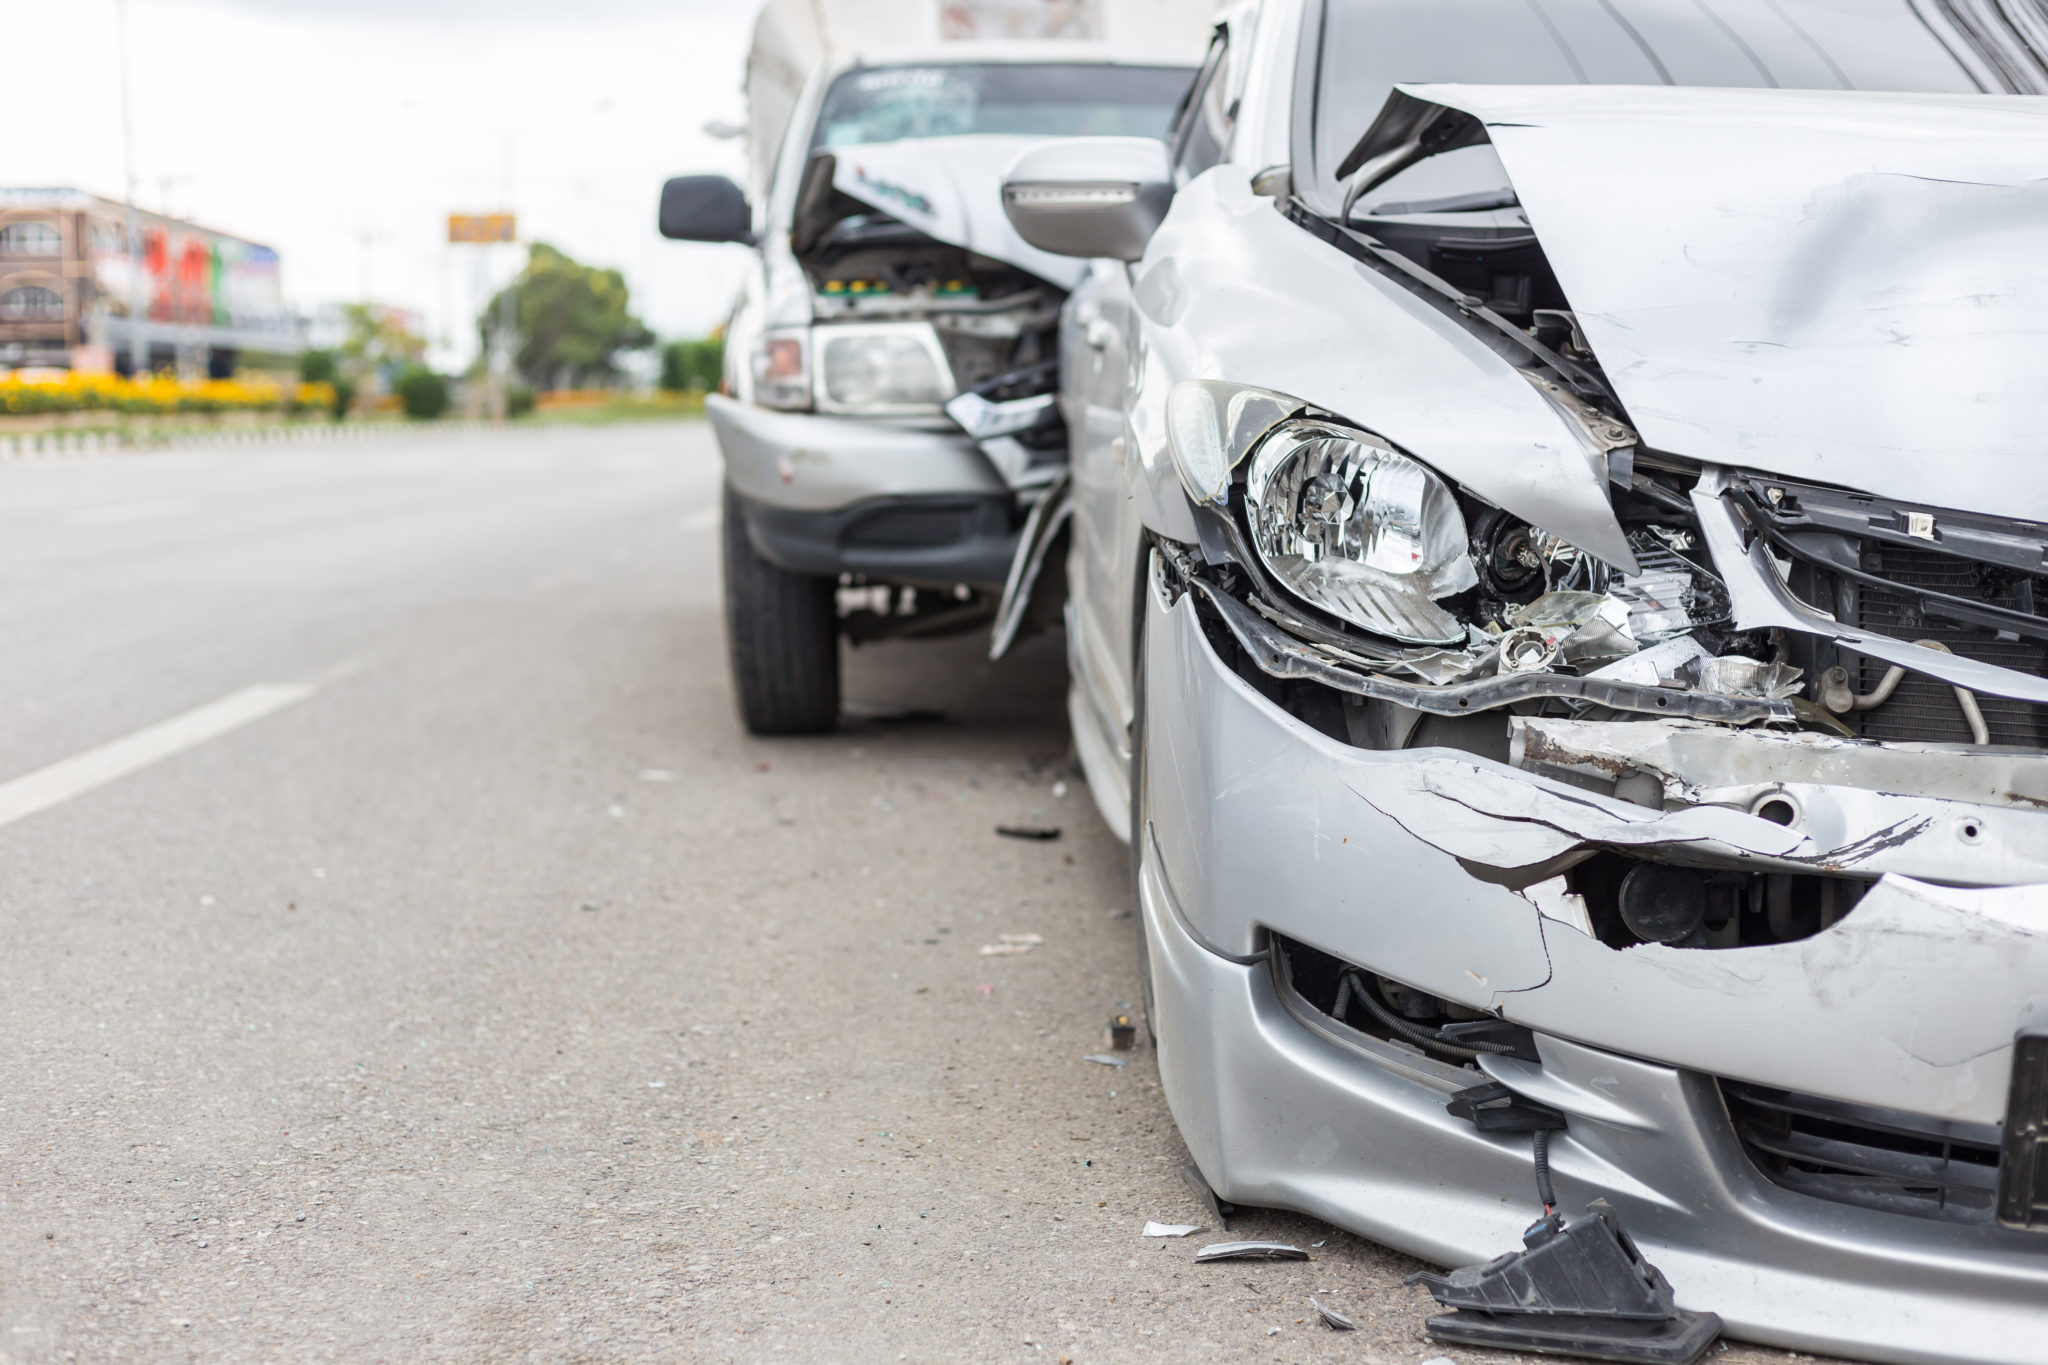 Collisions and Dangerous Driving Behaviors in Ohio